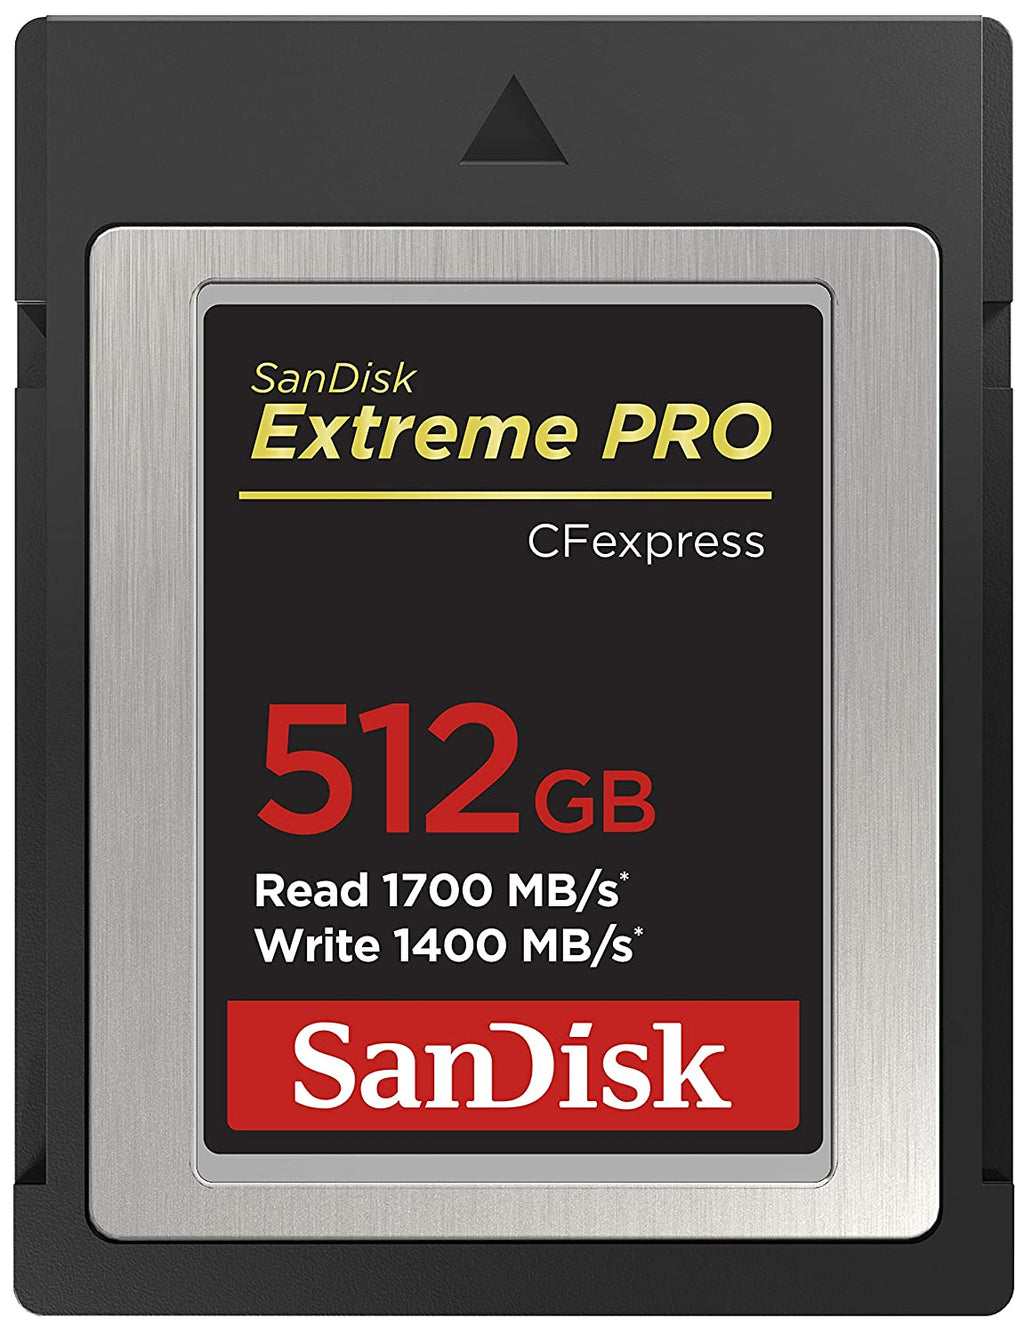 सैनडिस्क एक्सट्रीम प्रो सीएफएक्सप्रेस कार्ड टाइप बी (512 जीबी)